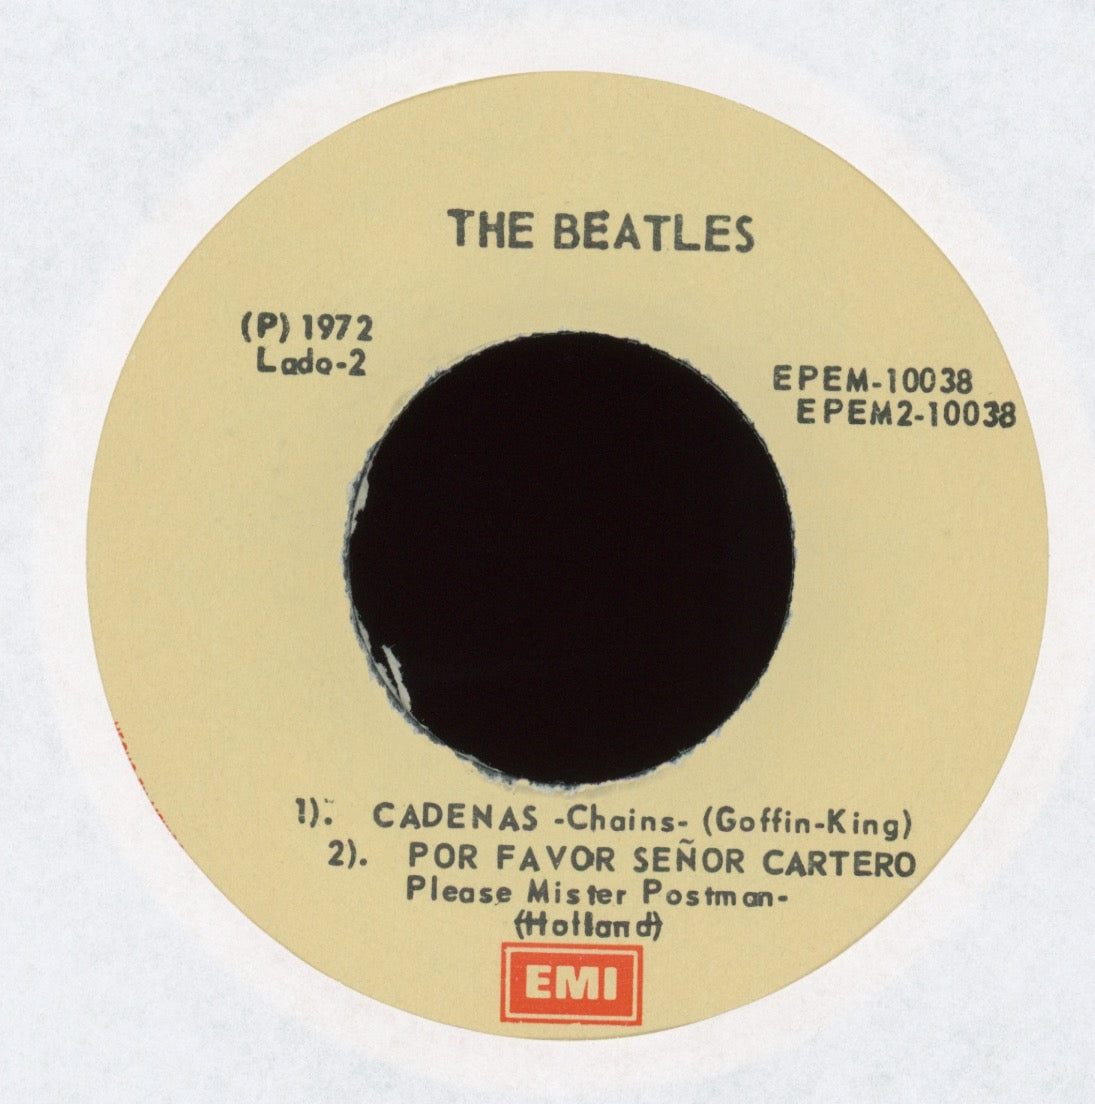 The Beatles - El Diablo En Su Corazon on EMI EPEM-10038 Mexican Reissue With Picture Sleeve